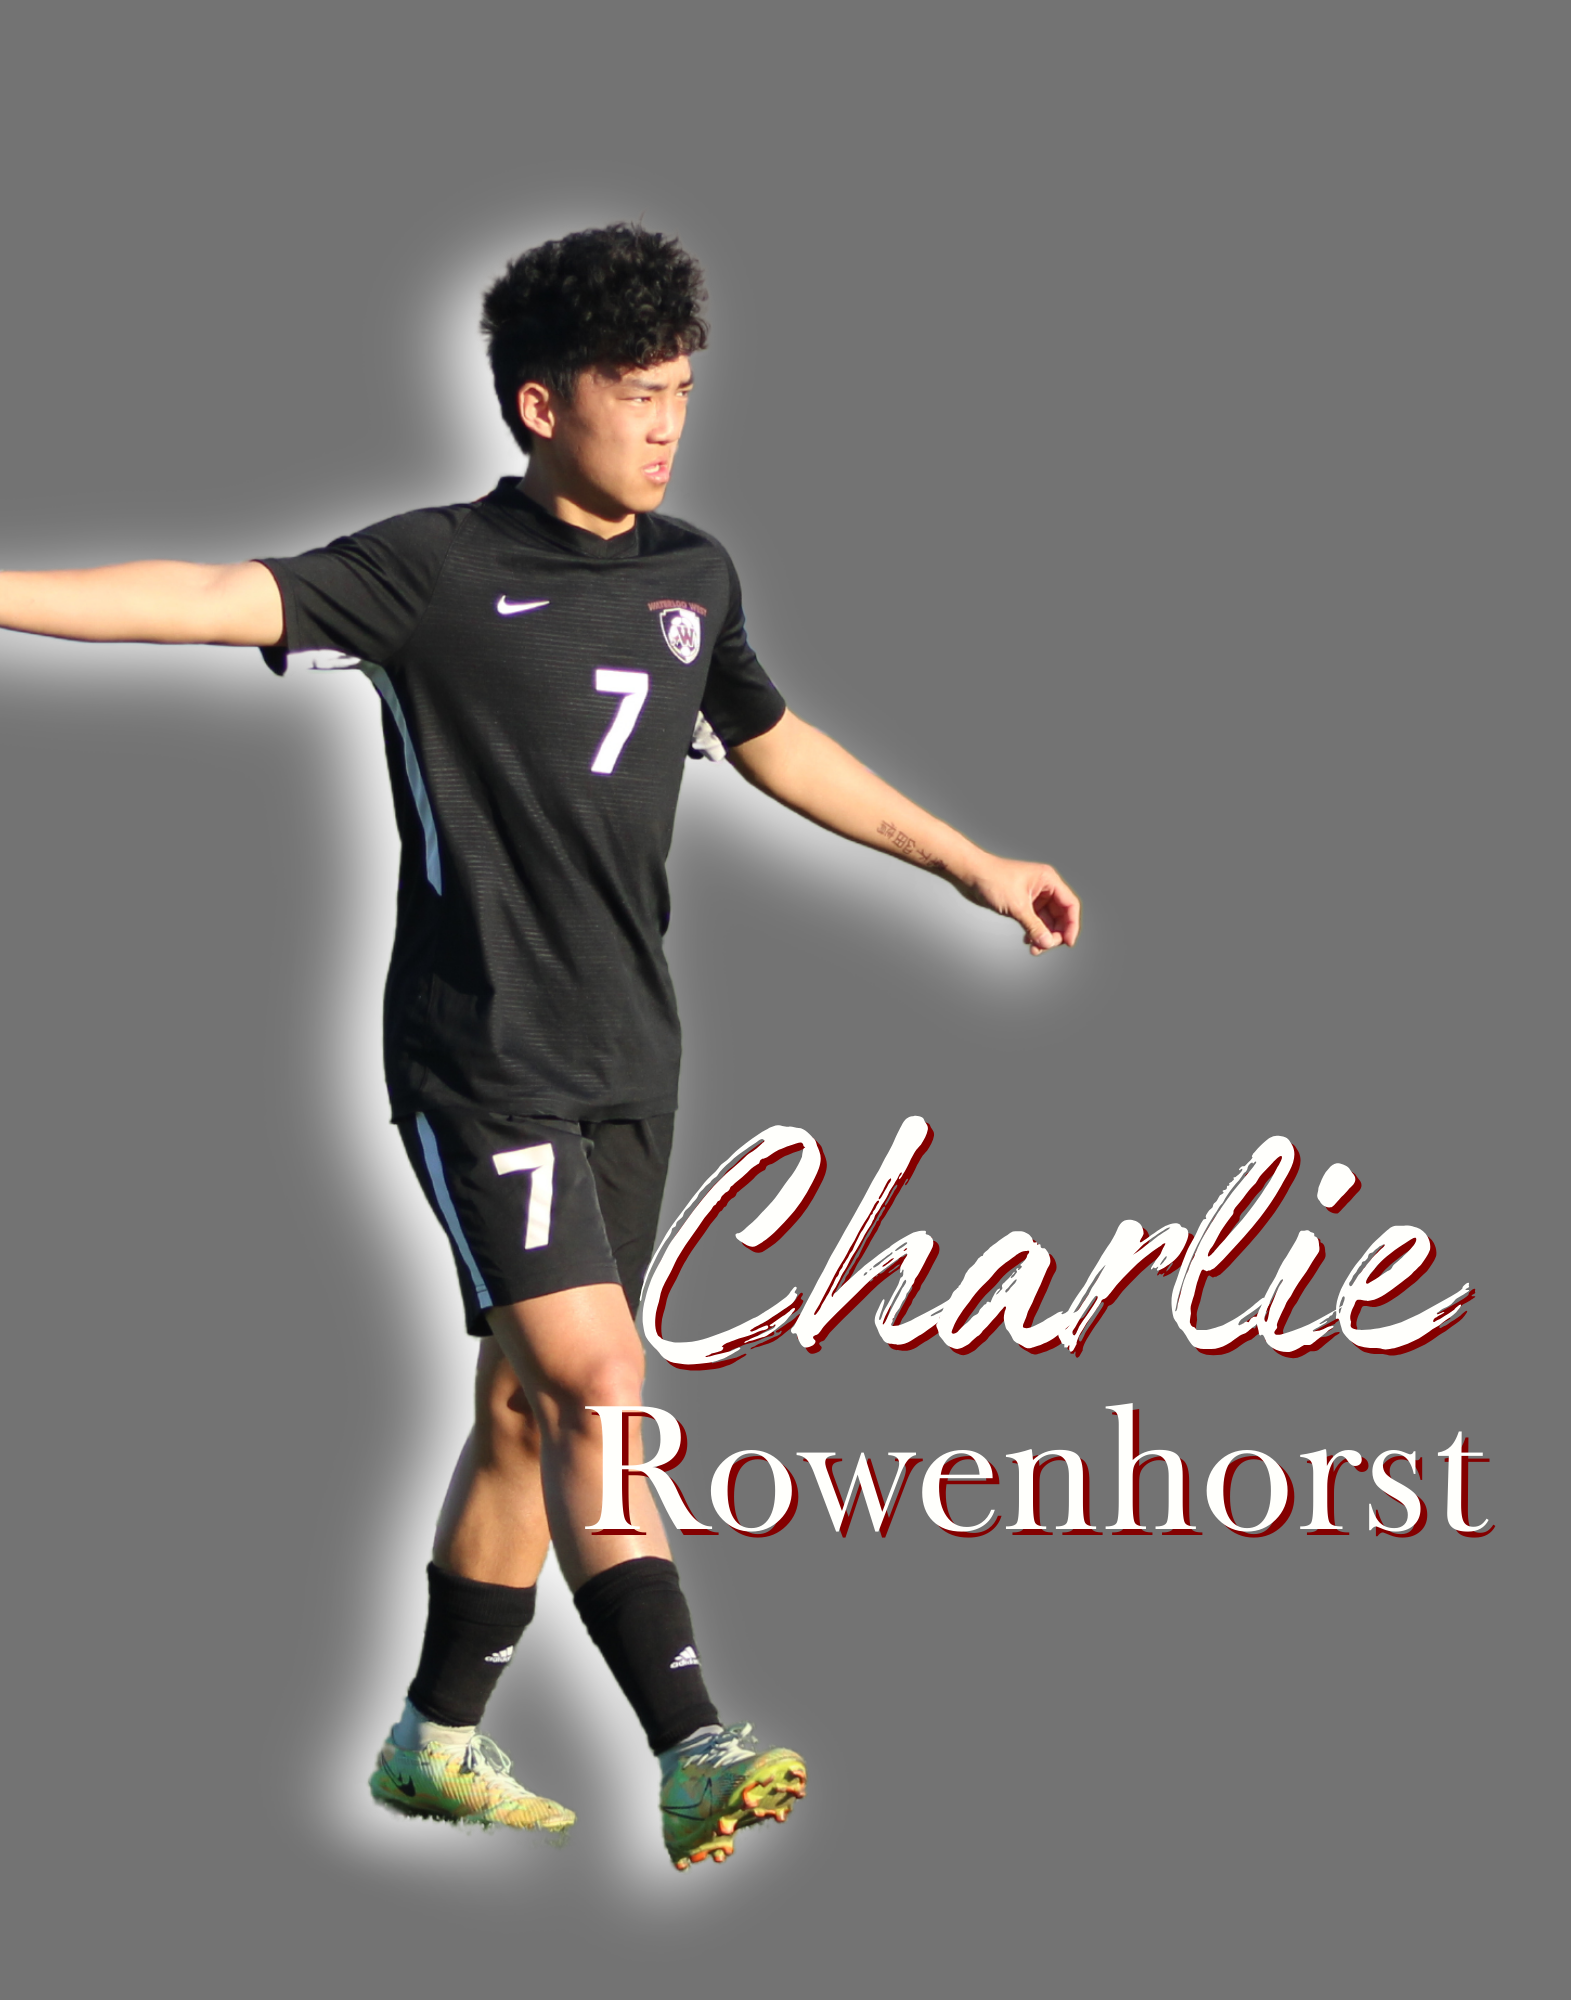 Senior Charlie Rowenhorst plans to attend Northwestern University to play Soccer